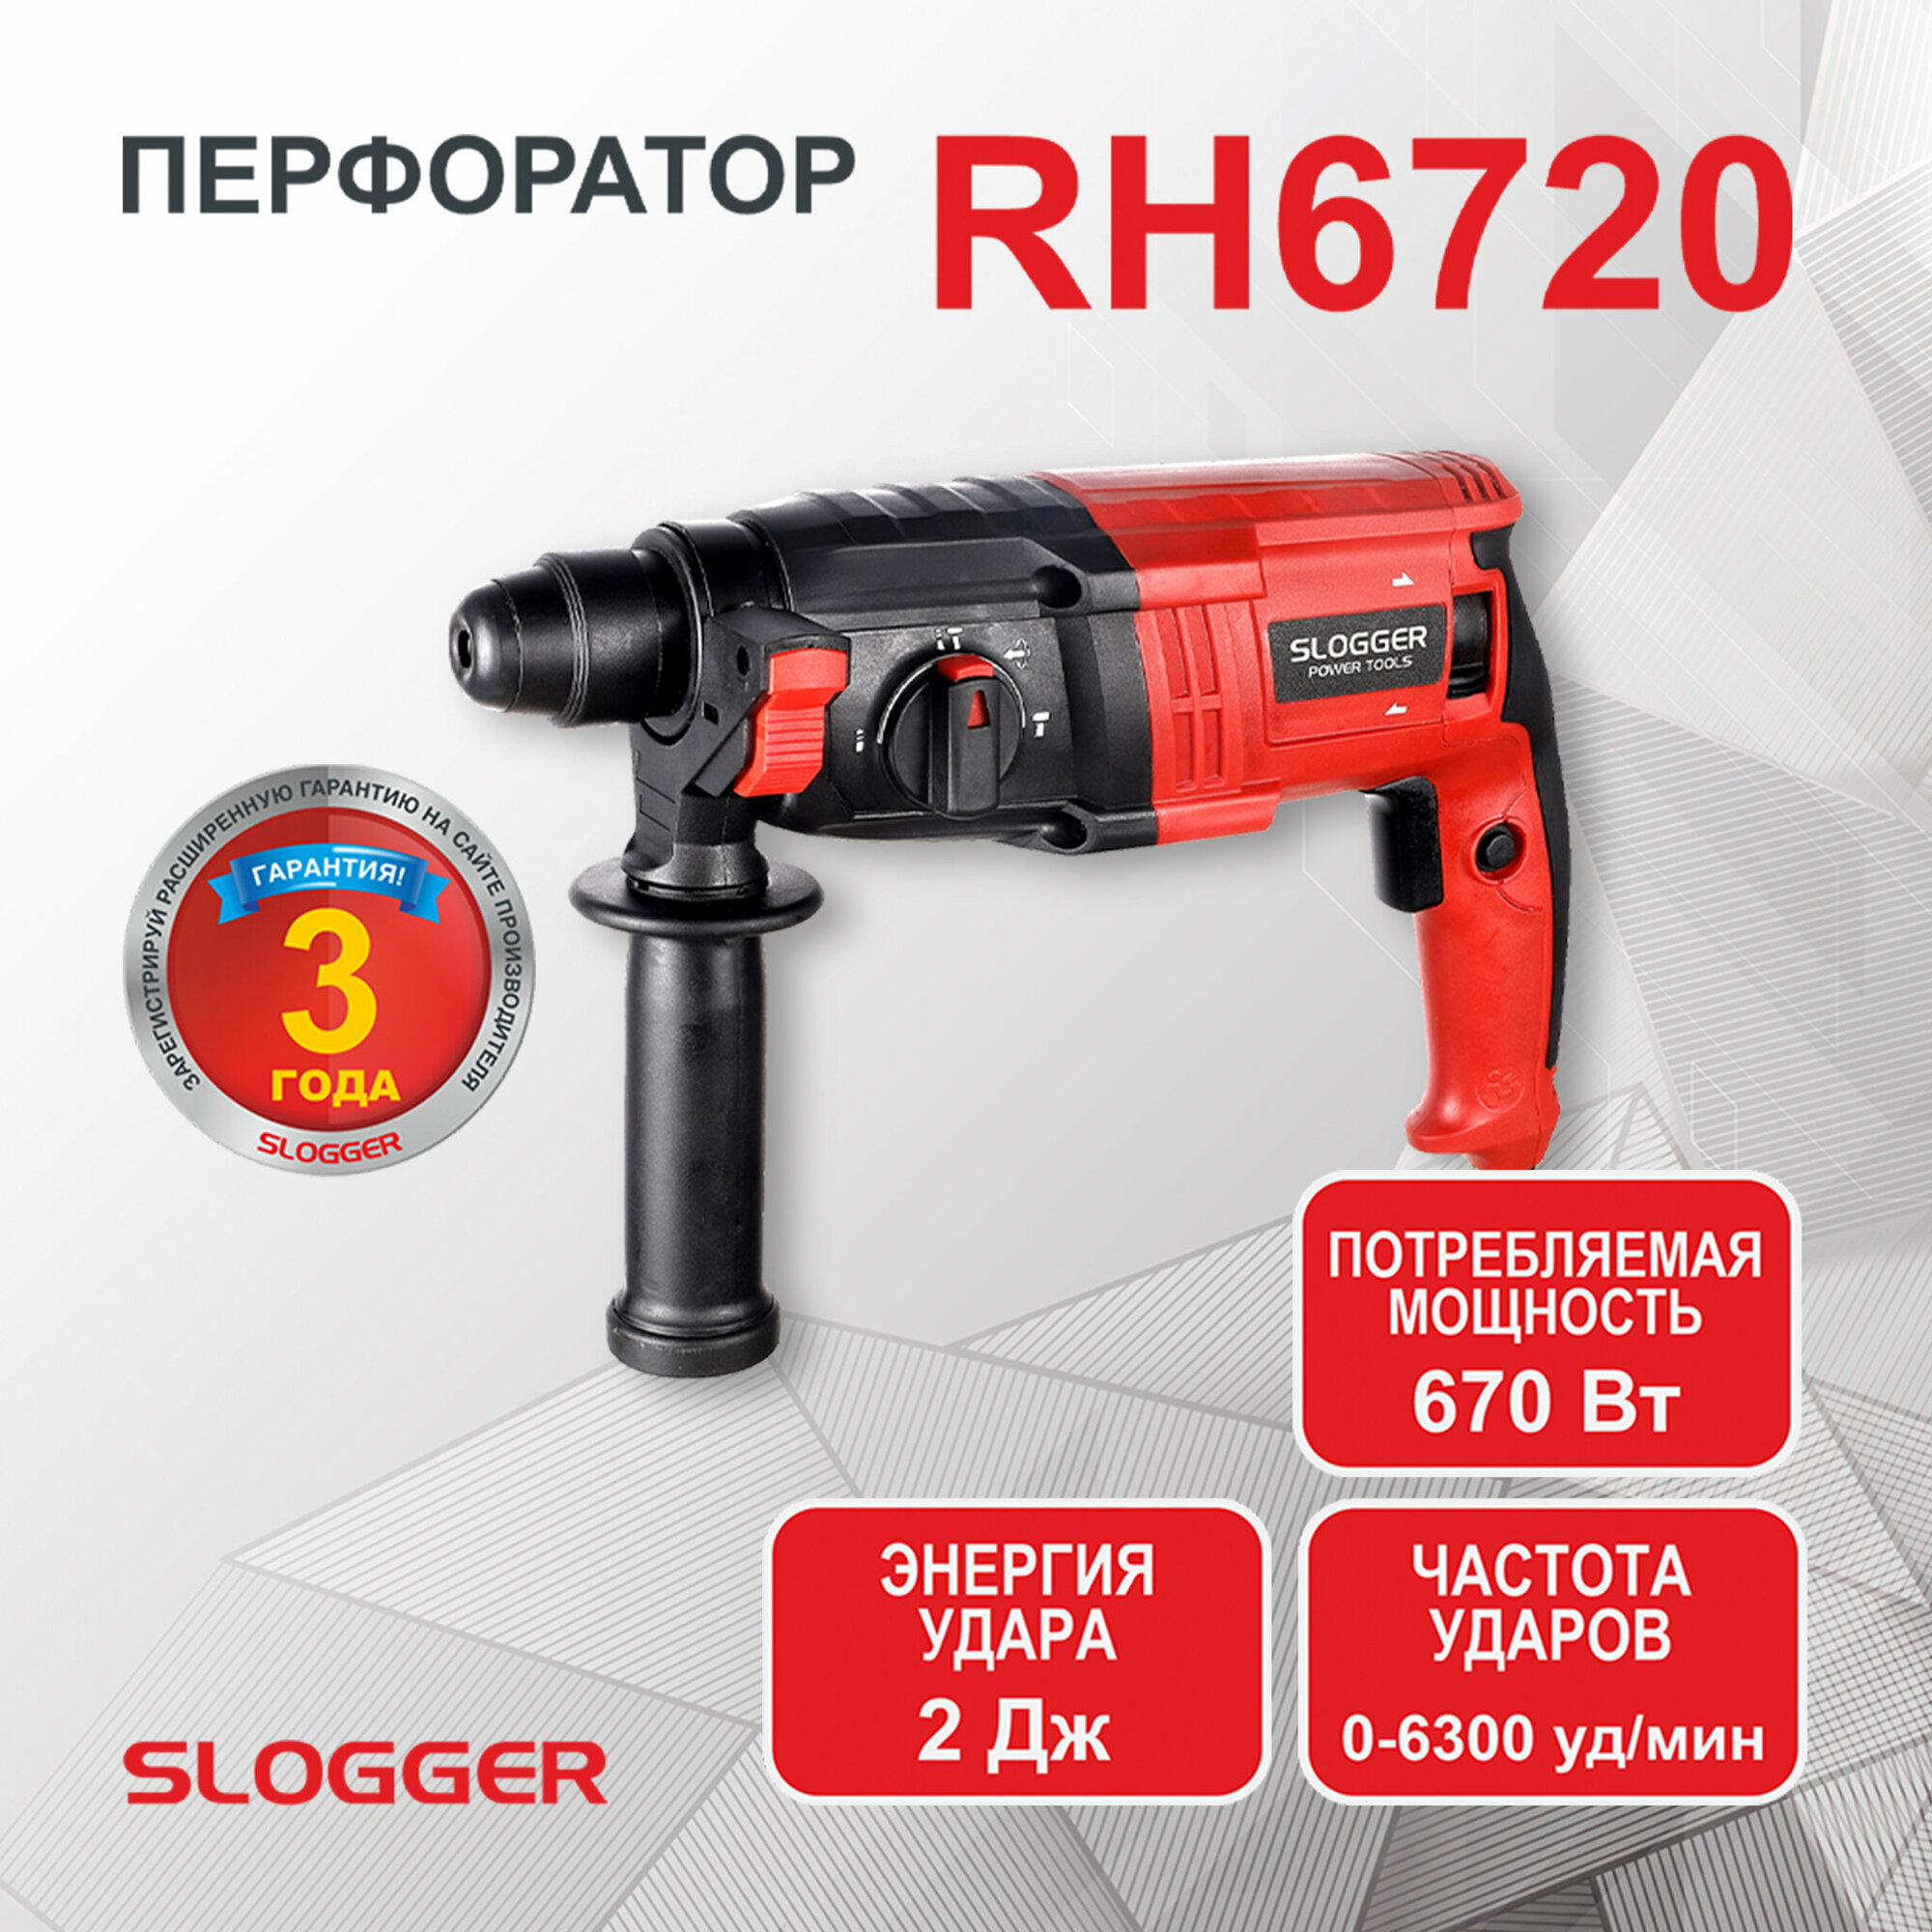 Перфоратор Slogger RH6720, 670Вт, 2Дж, кейс, буры в комплекте, Патрон SDS-Plus